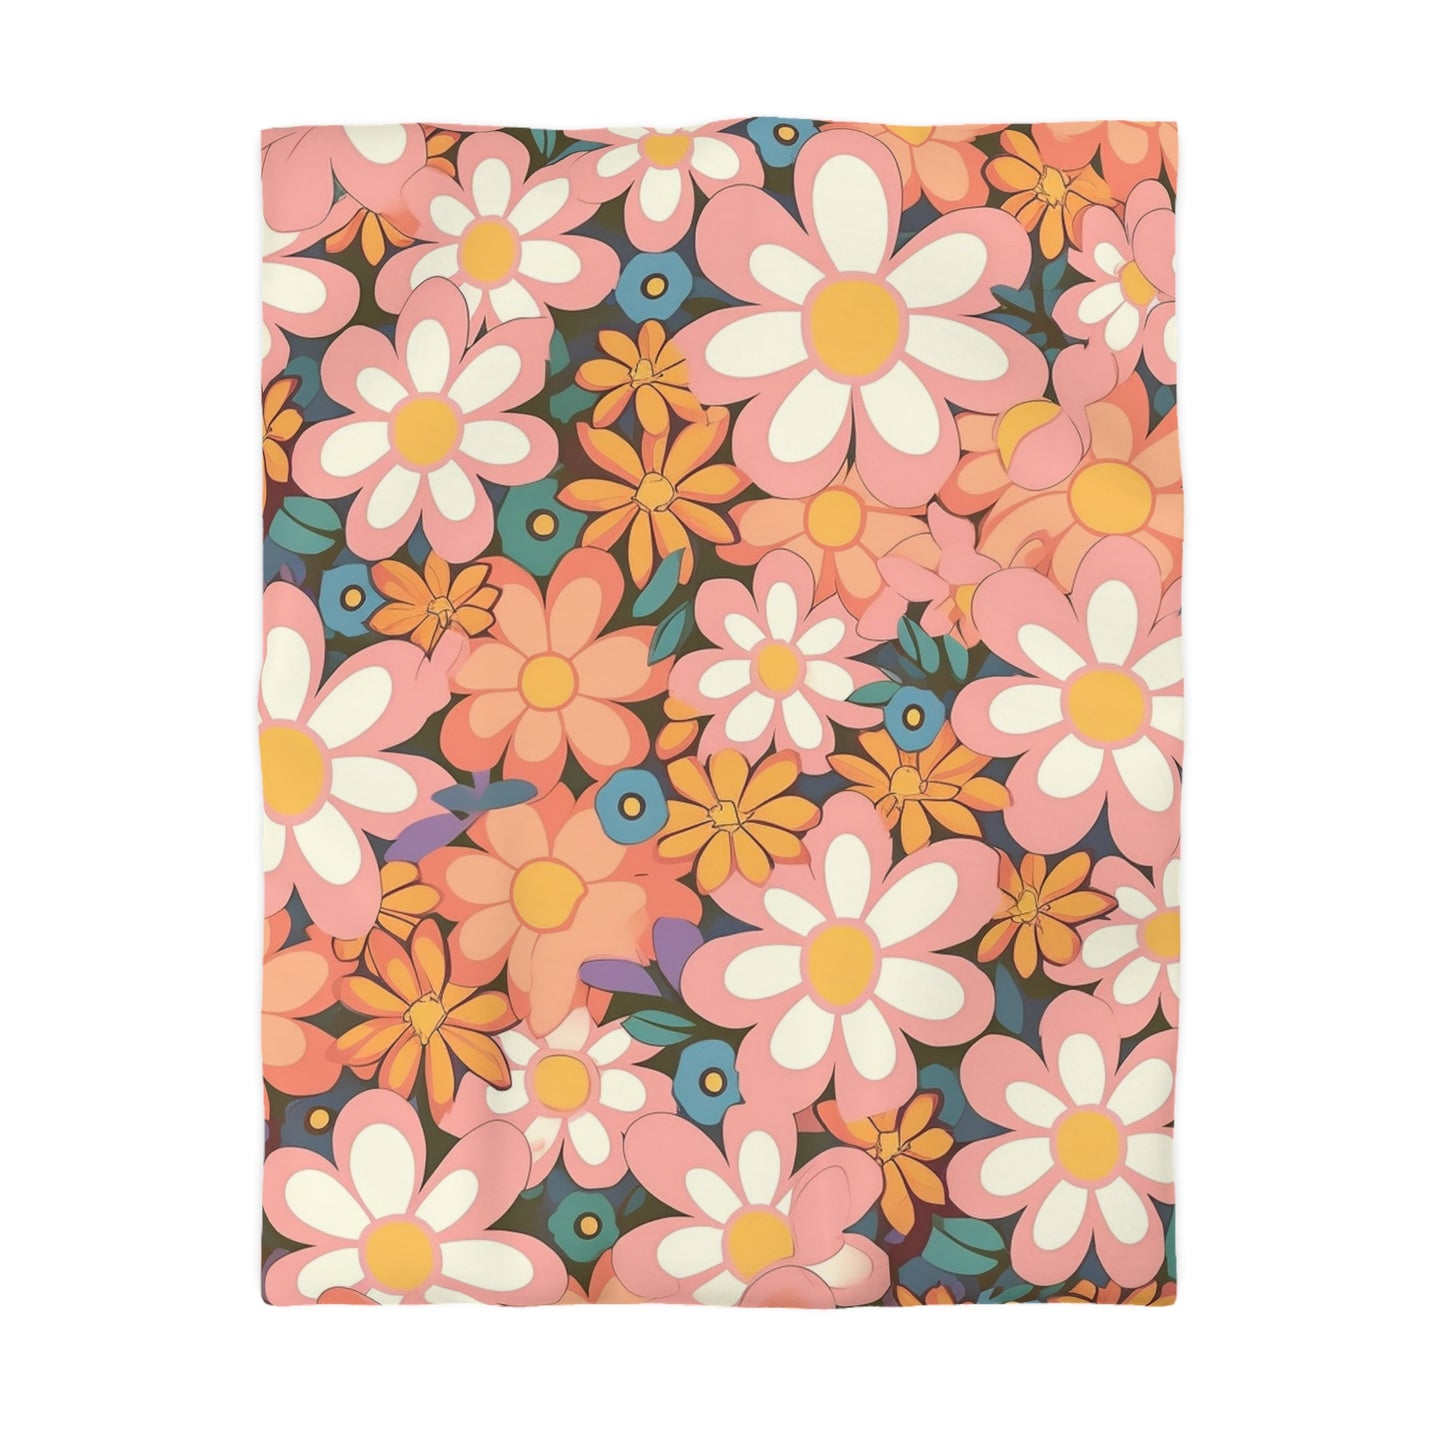 Groovy 1960s 1970s Pink & Orange Daisy Mod Floral - Microfiber Duvet Cover